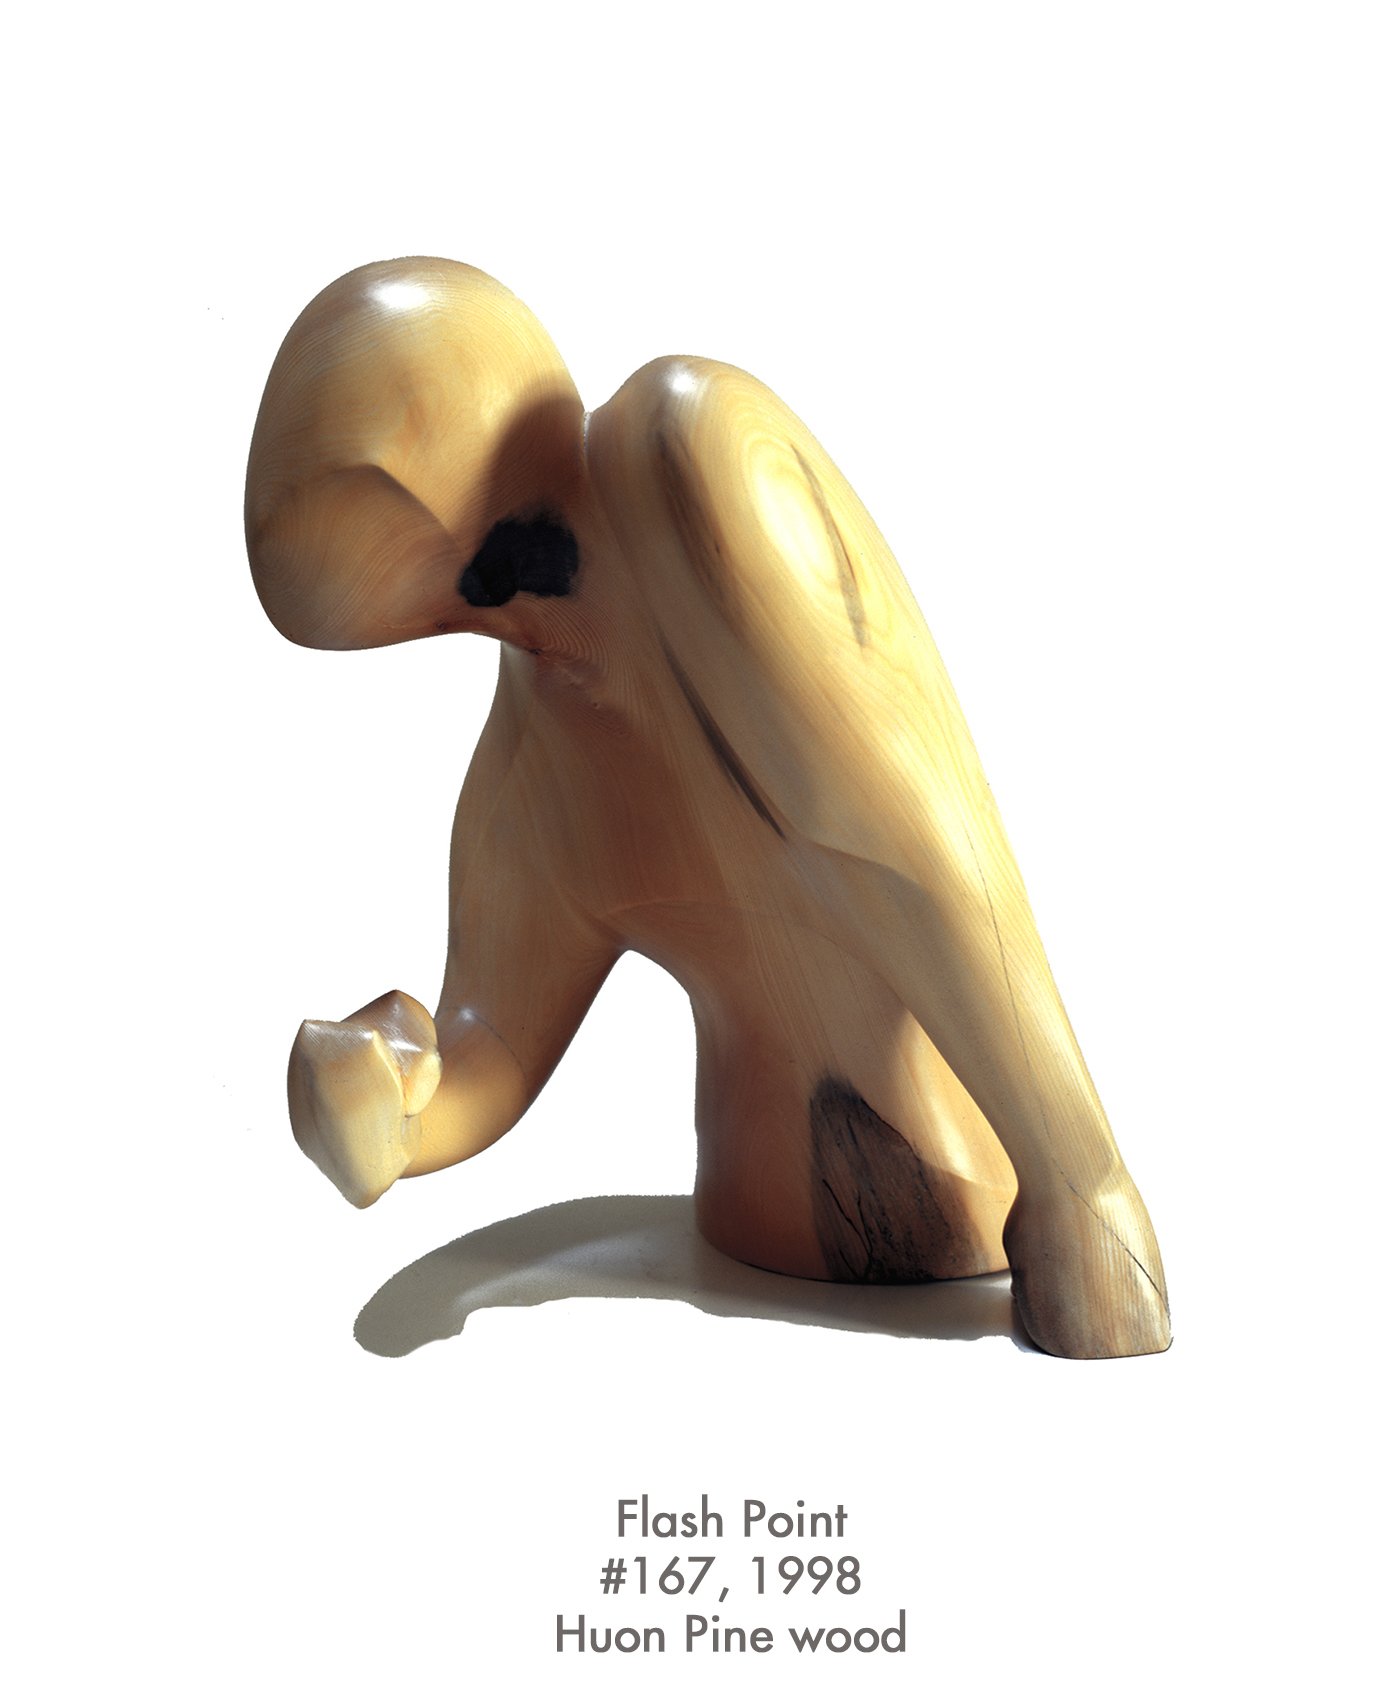 Flash Point, 1998, Huon pine, #167